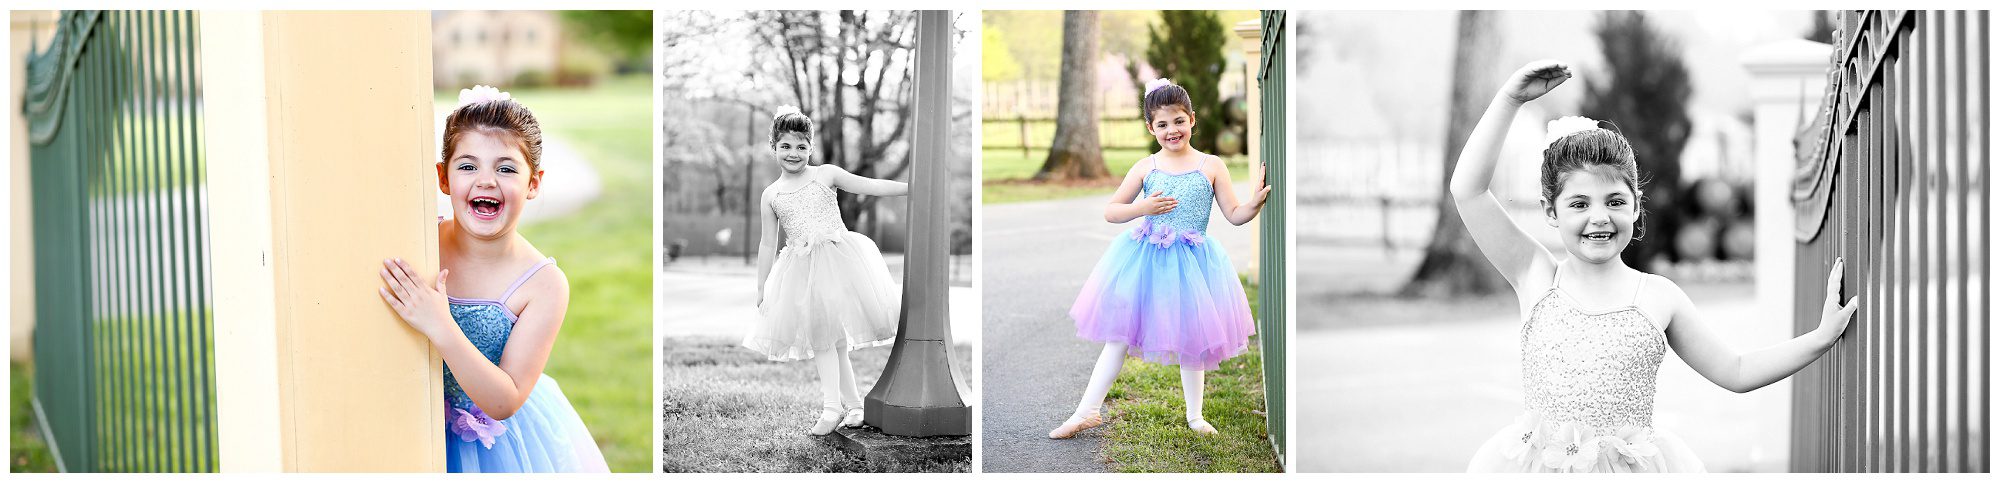 Charlottesville Ballerina Spring Recital Costume Portraits Albemarle County ballet dance dancer pictures photographer photography